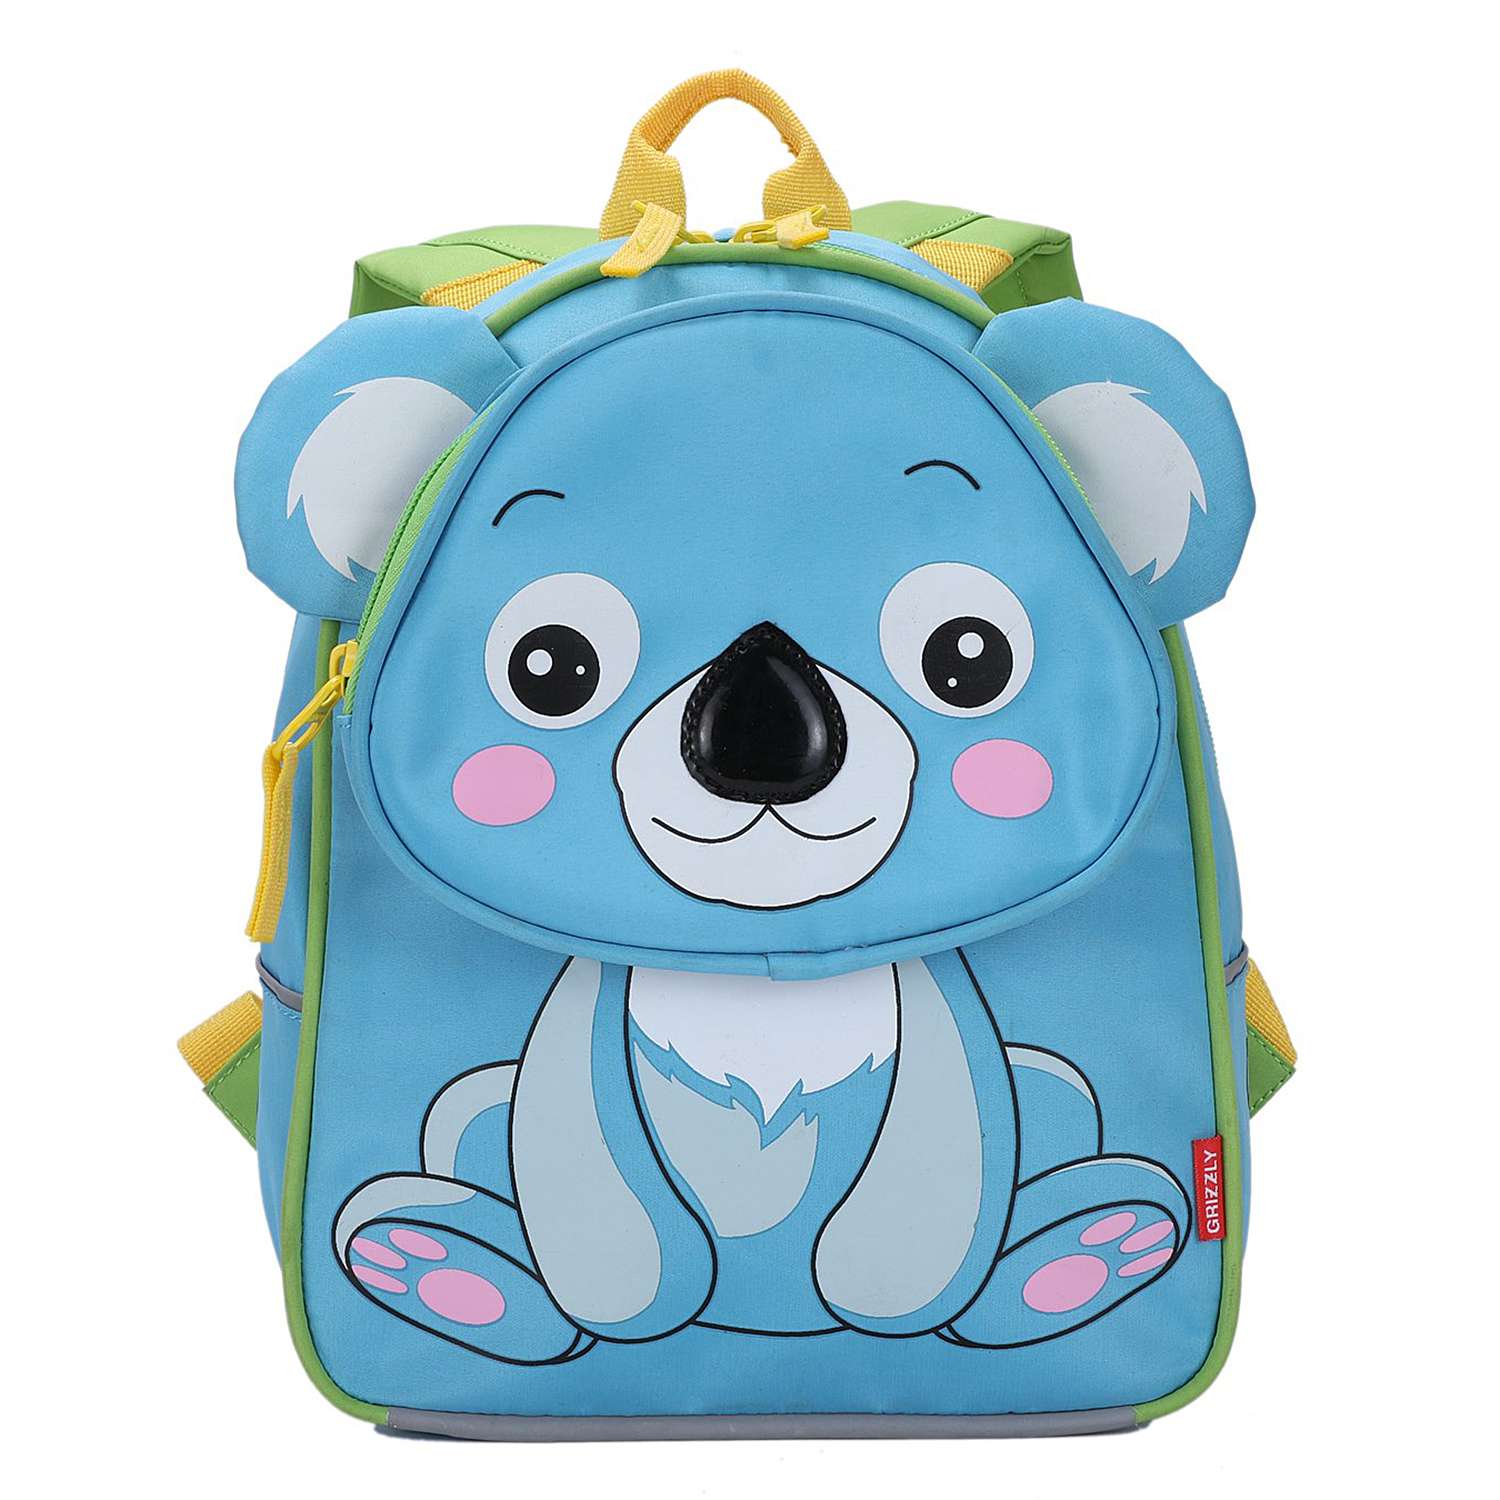 Рюкзак детский Grizzly Коала Голубой RS-073-1/1 - фото 1